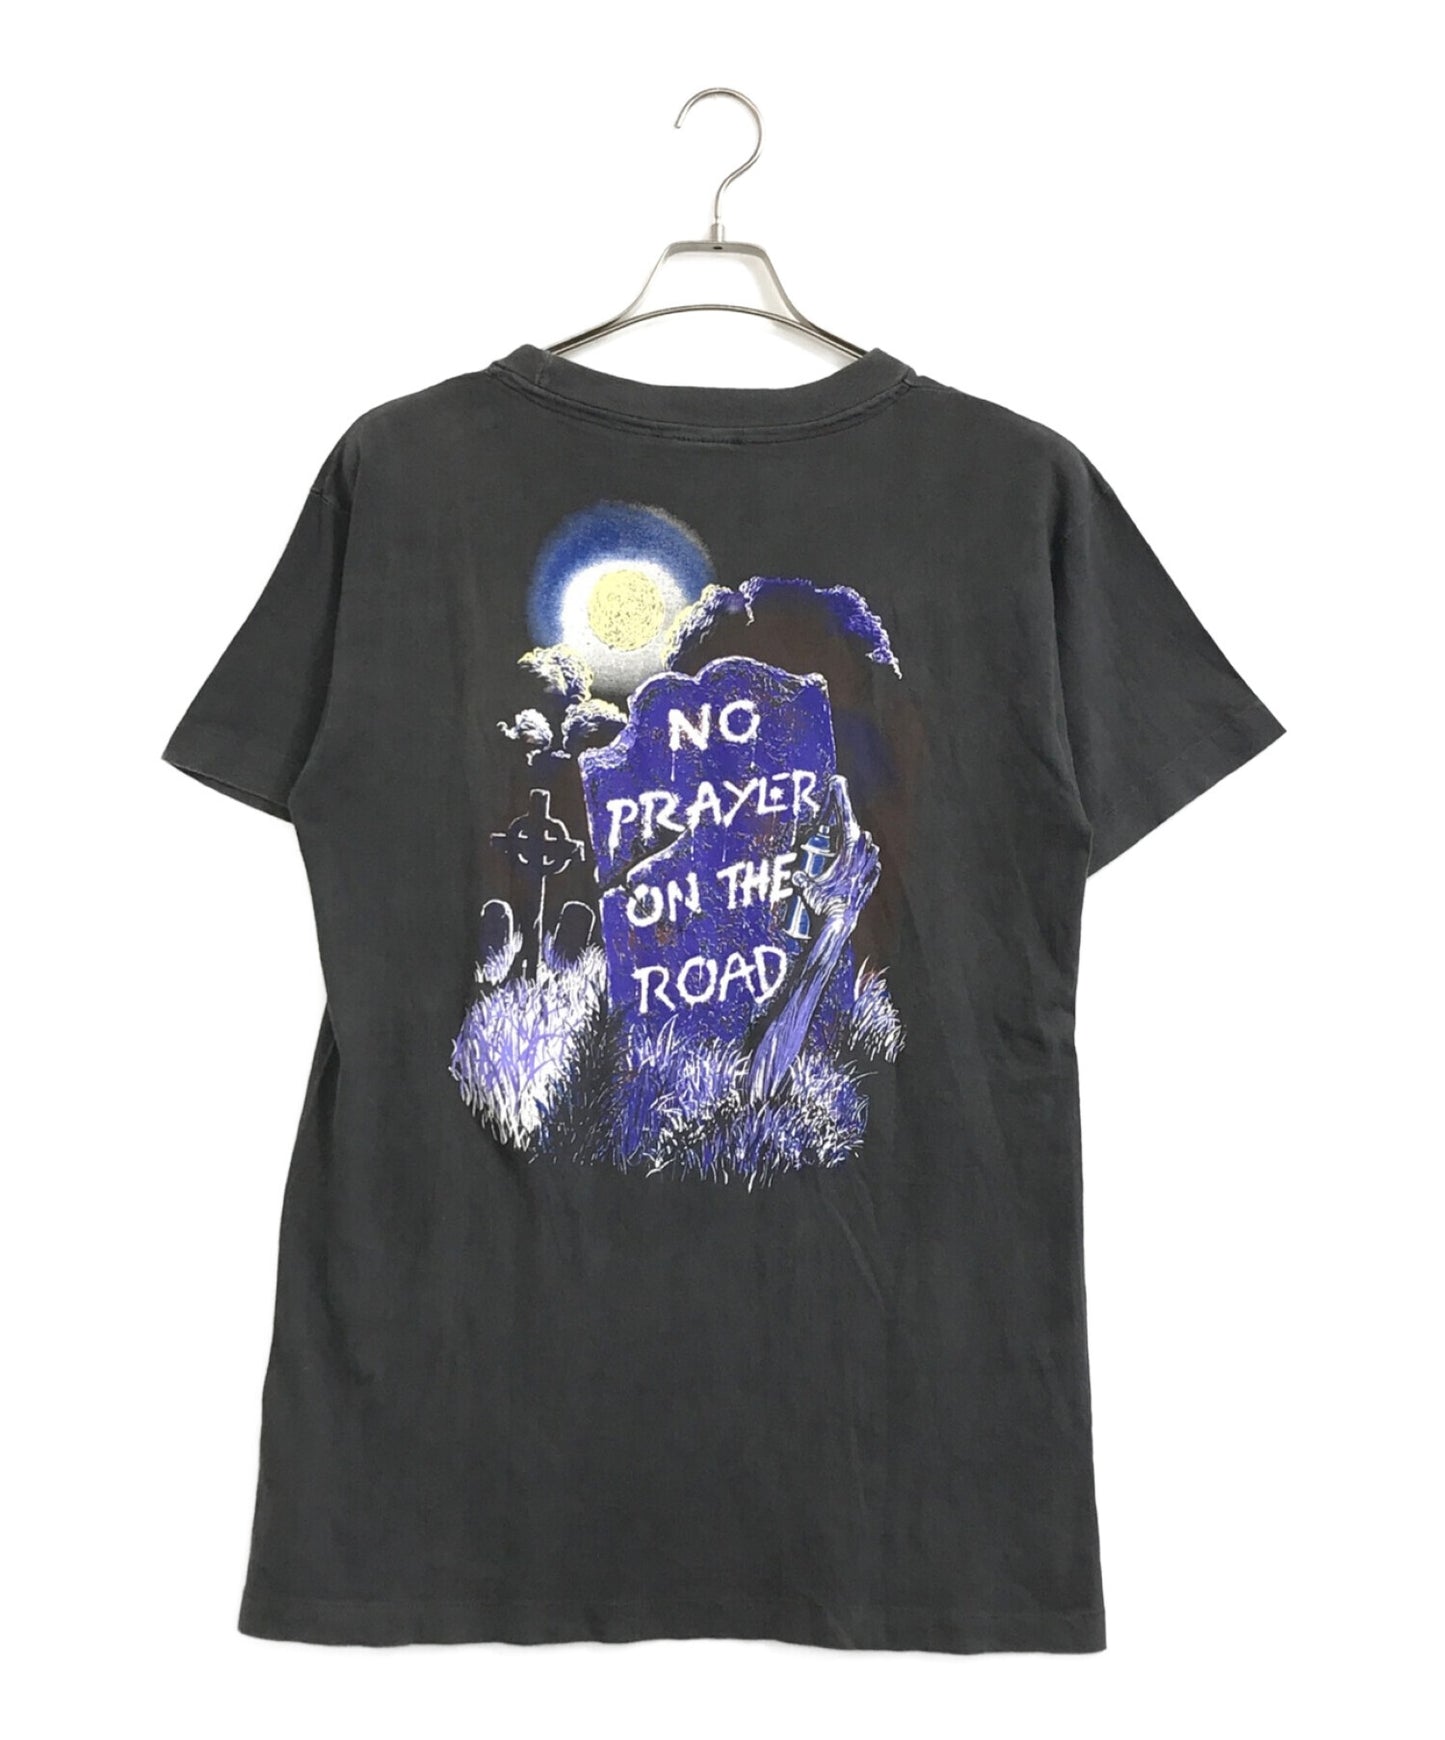 IRON MAIDEN 90s Band T-shirt